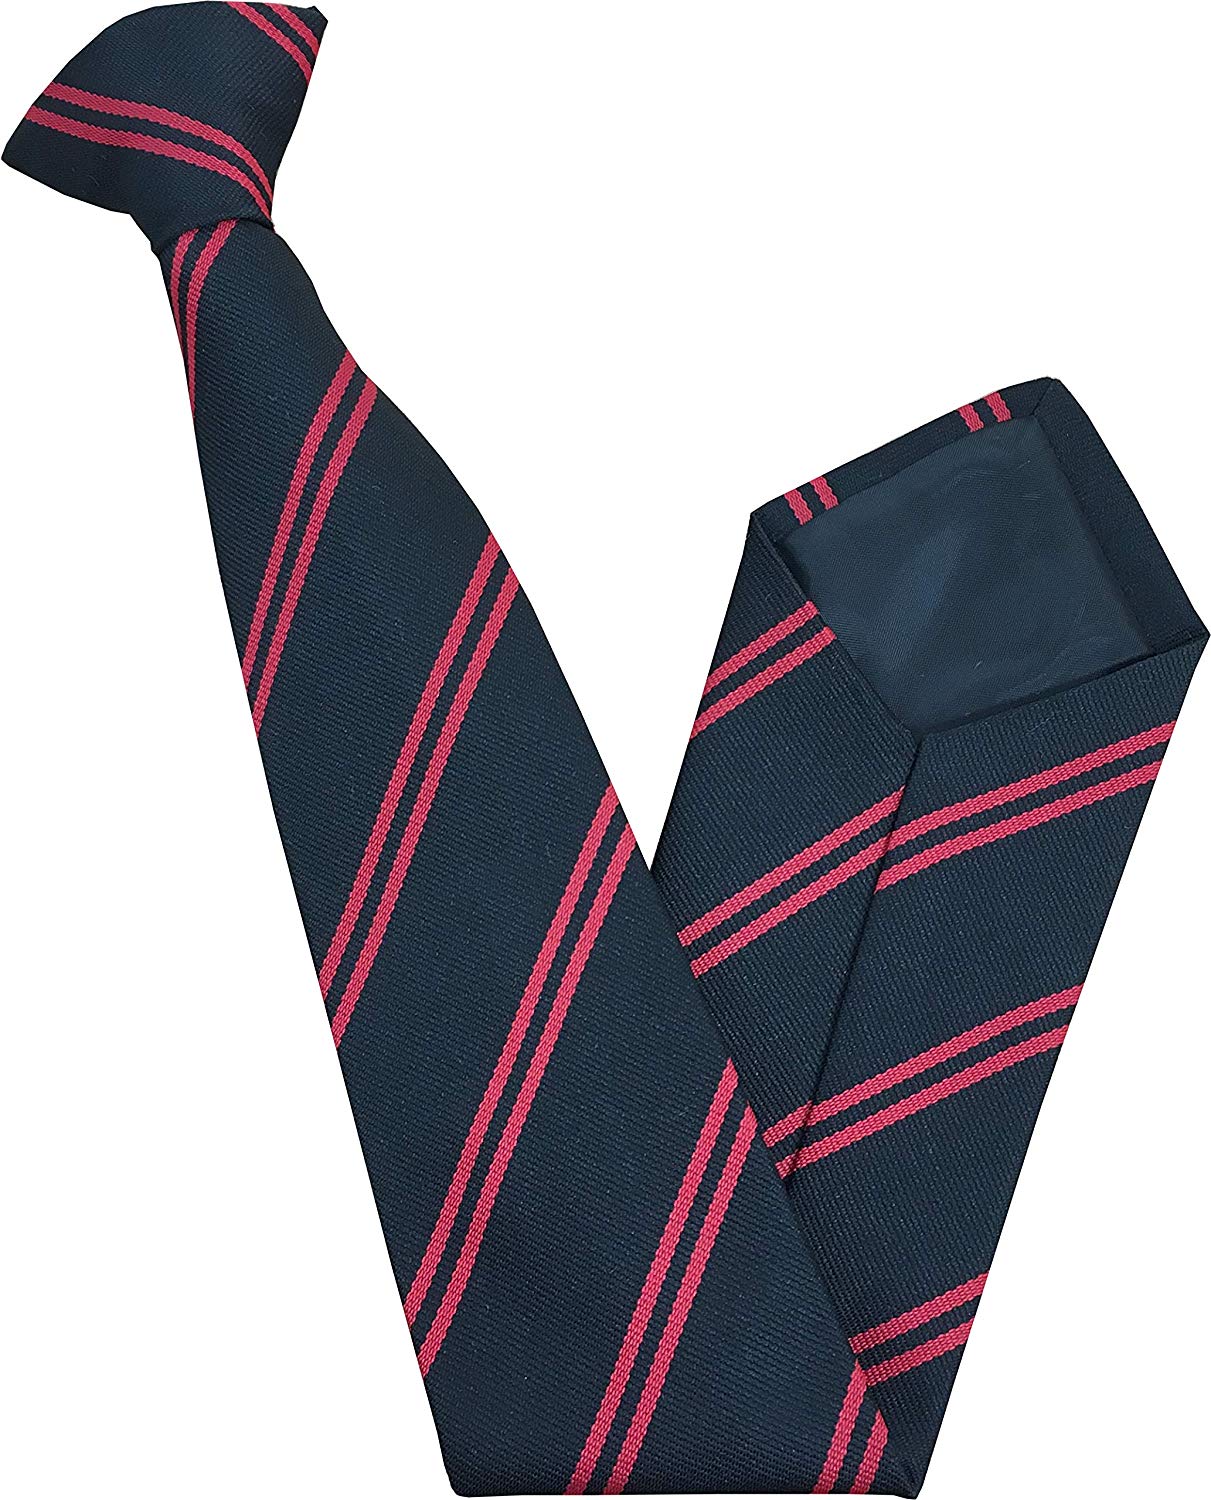 Pick Your Own School Tie! 14 Double Stripe Variations 